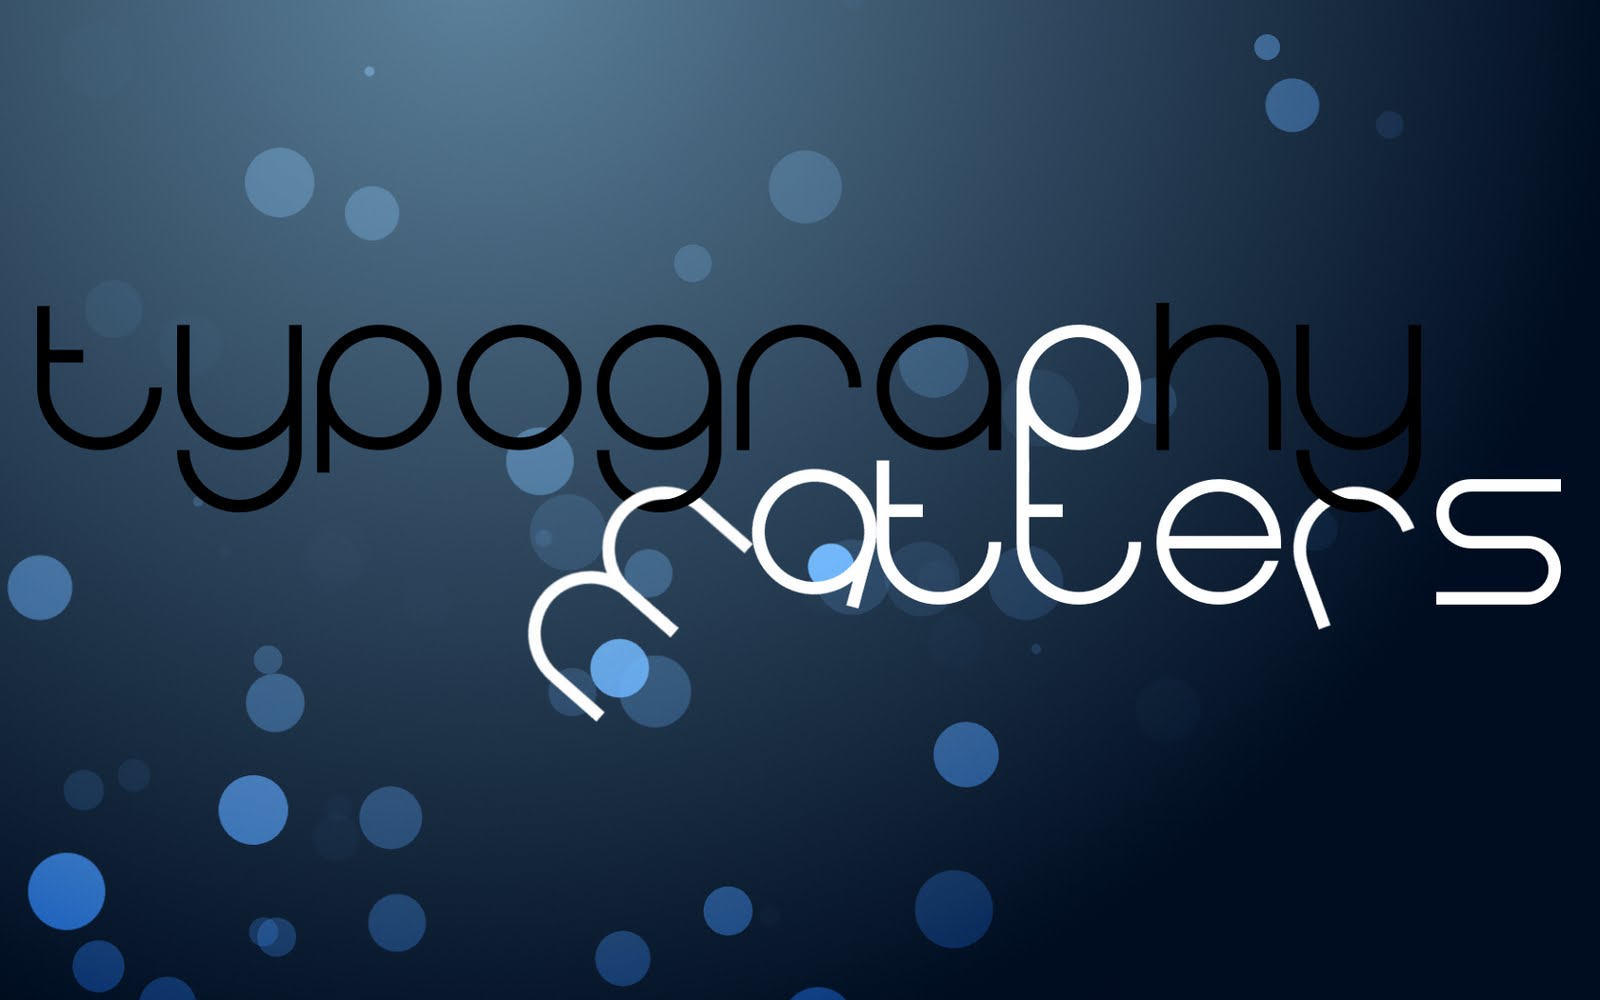 http://3.bp.blogspot.com/_nD_YgZuOadA/TJfMocxwFdI/AAAAAAAAA24/RblHghS_BPo/s1600/Typography+Matters+v2+Blue.jpg